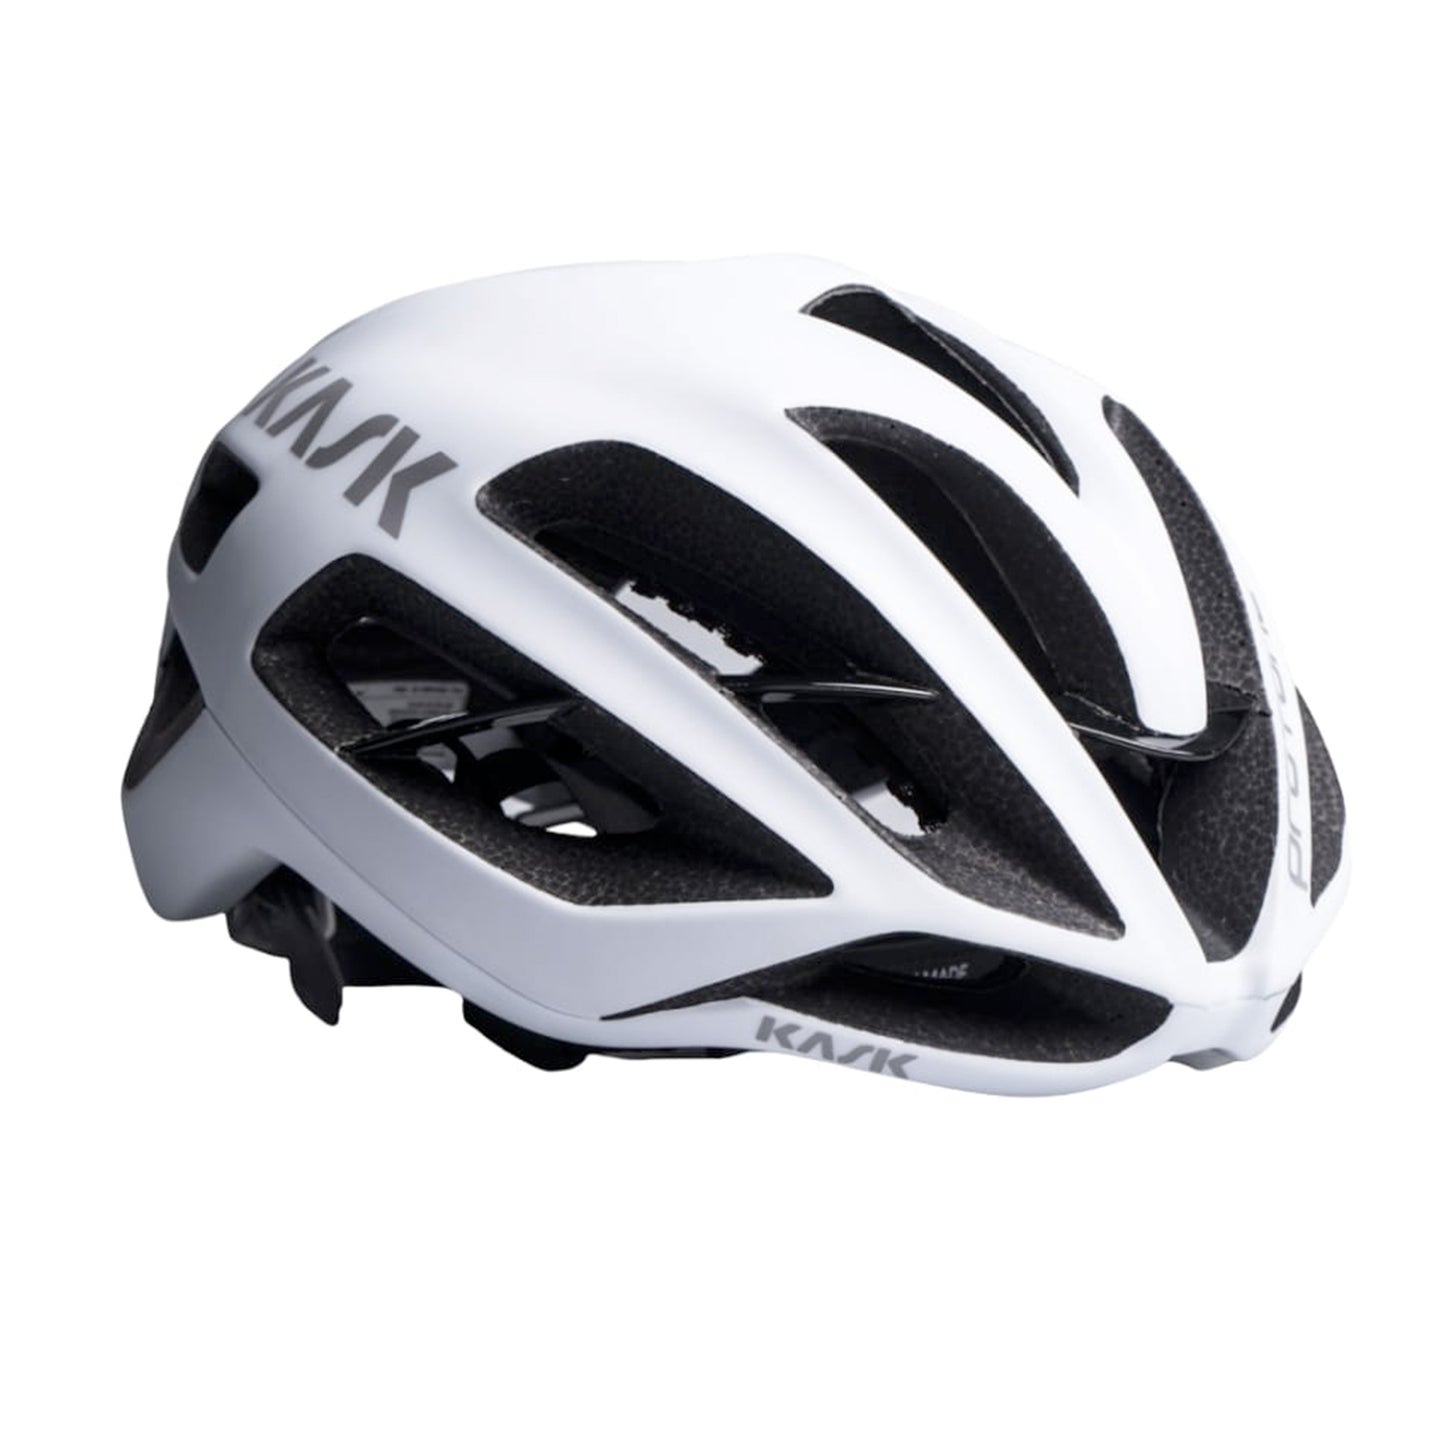 Kask Protone Icon Road Helmet, WG II, White Matt